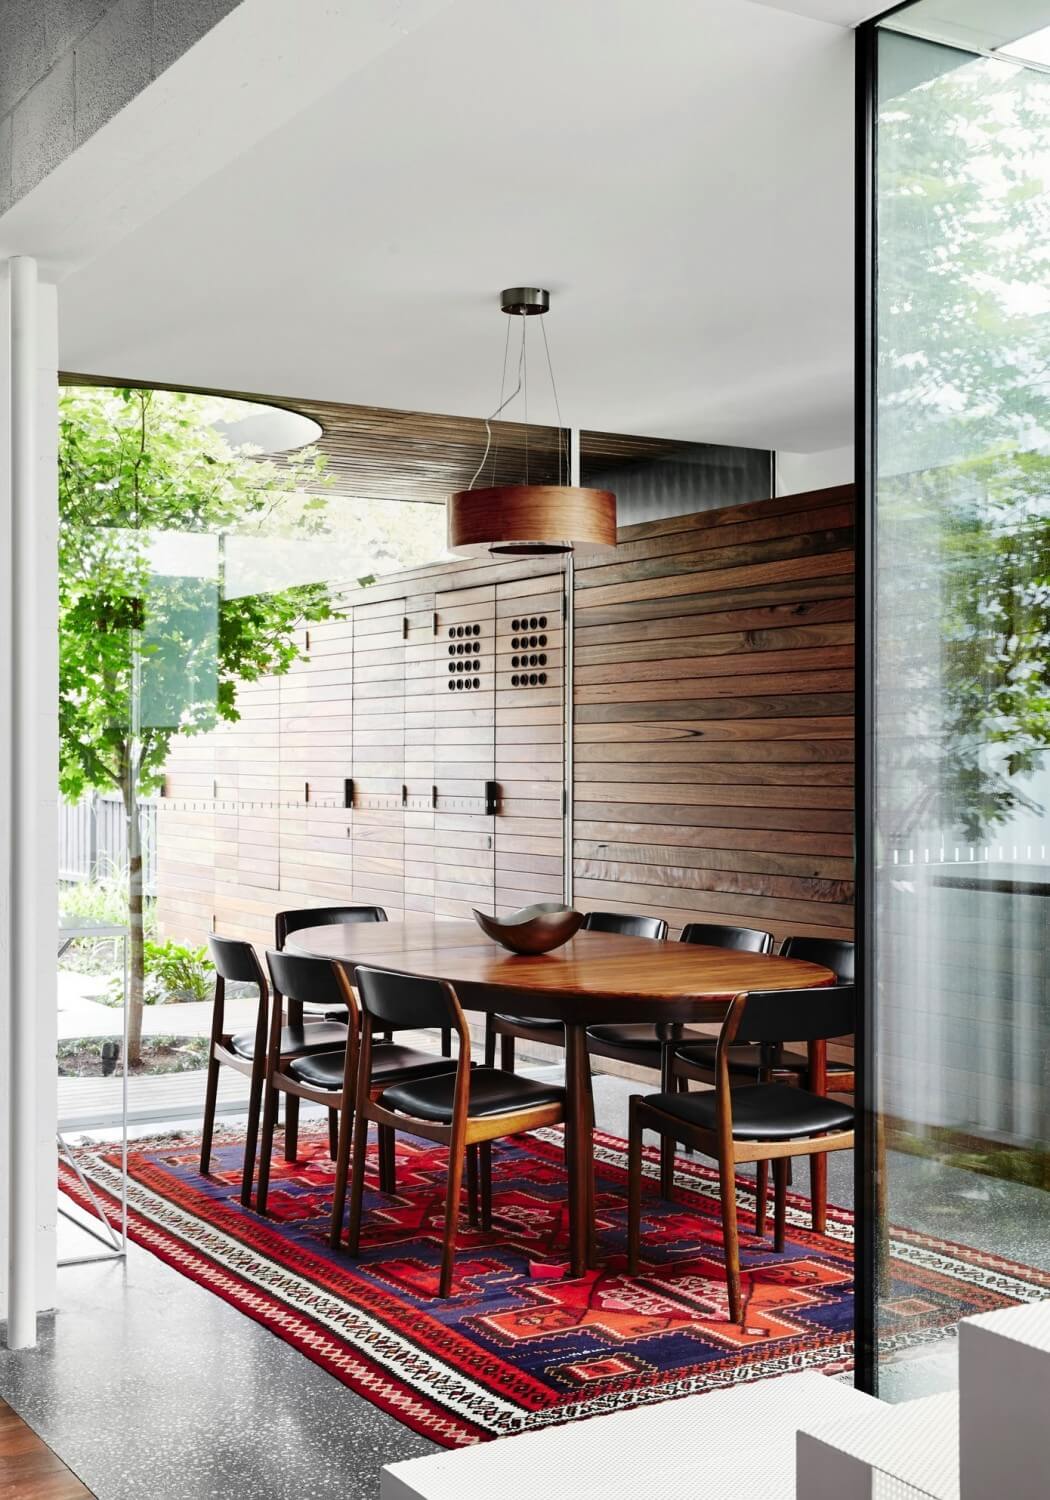 021-house-melbourne-austin-maynard-architects-1050x1500